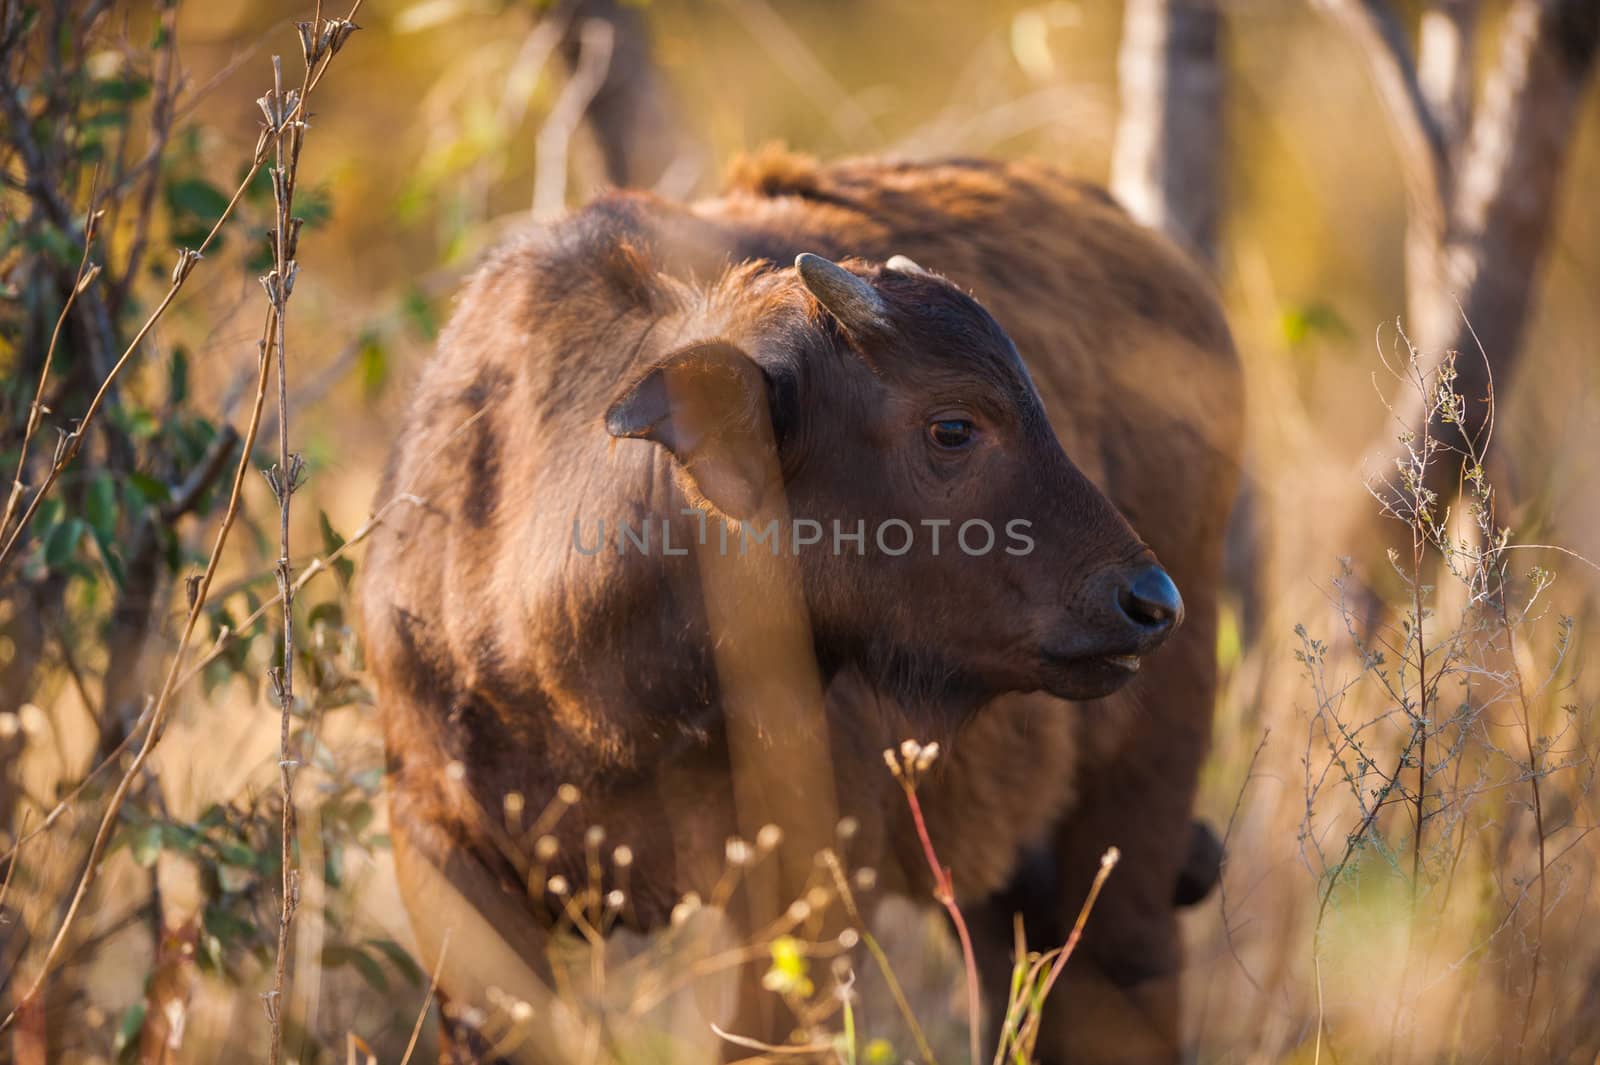 Cape buffalo (Syncerus caffer) by edan